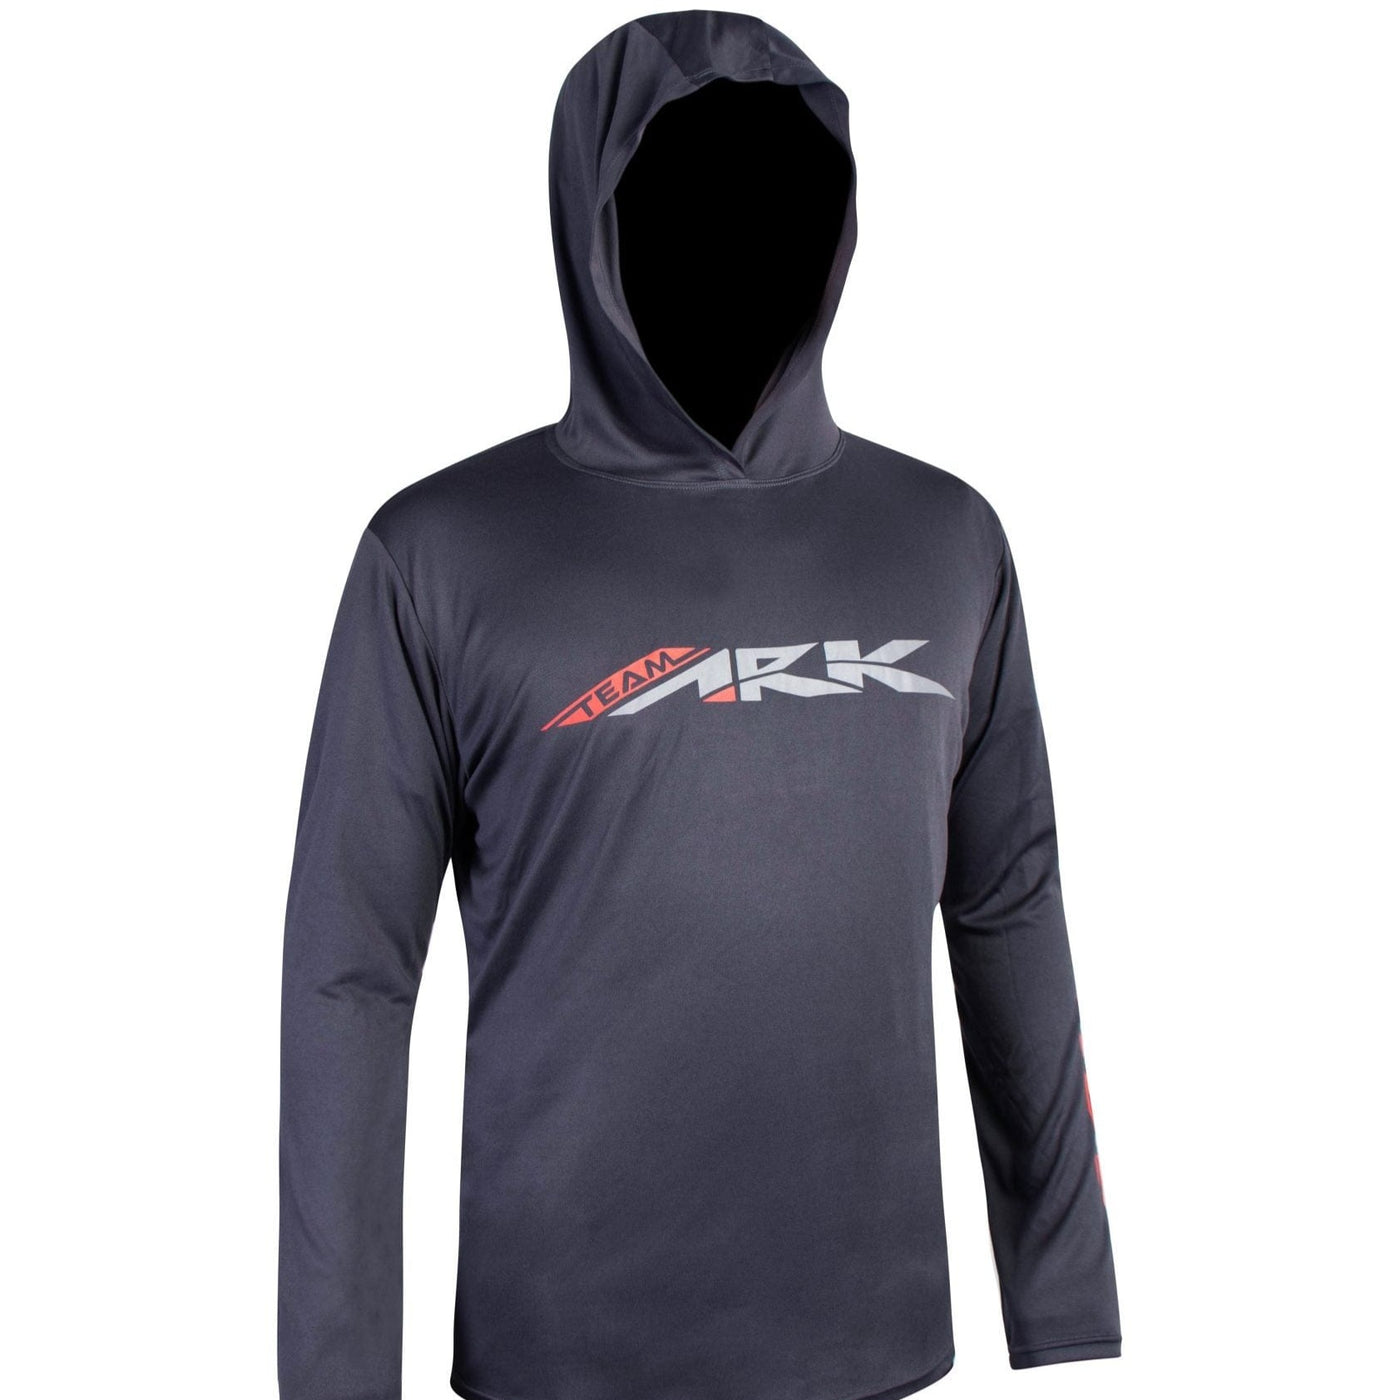 Team Ark UV Performance Hoodie Small / Dark Gray